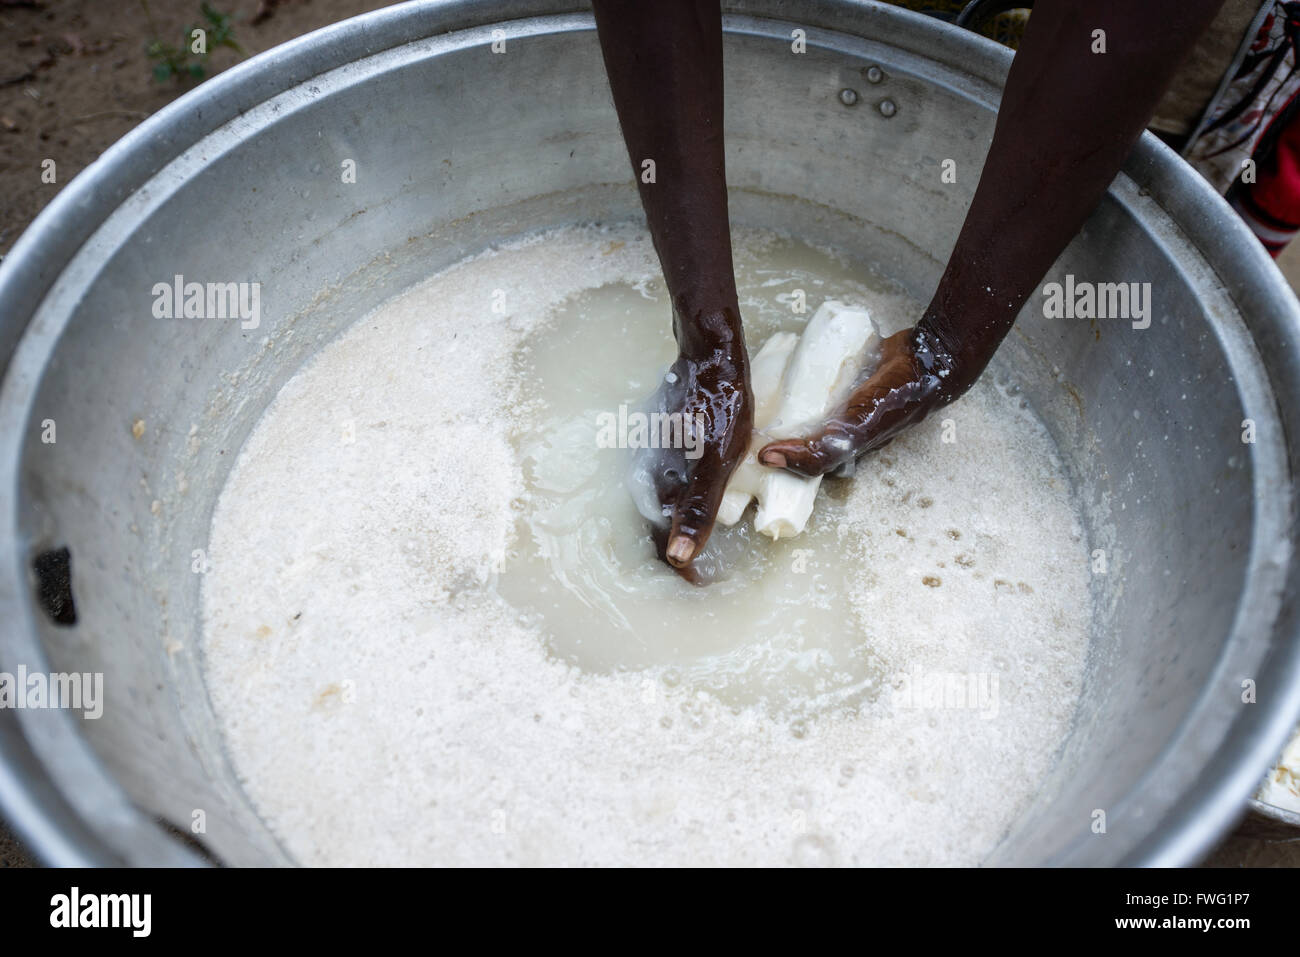 Woman preparing food, Democratic Republic of Congo Stock Photo